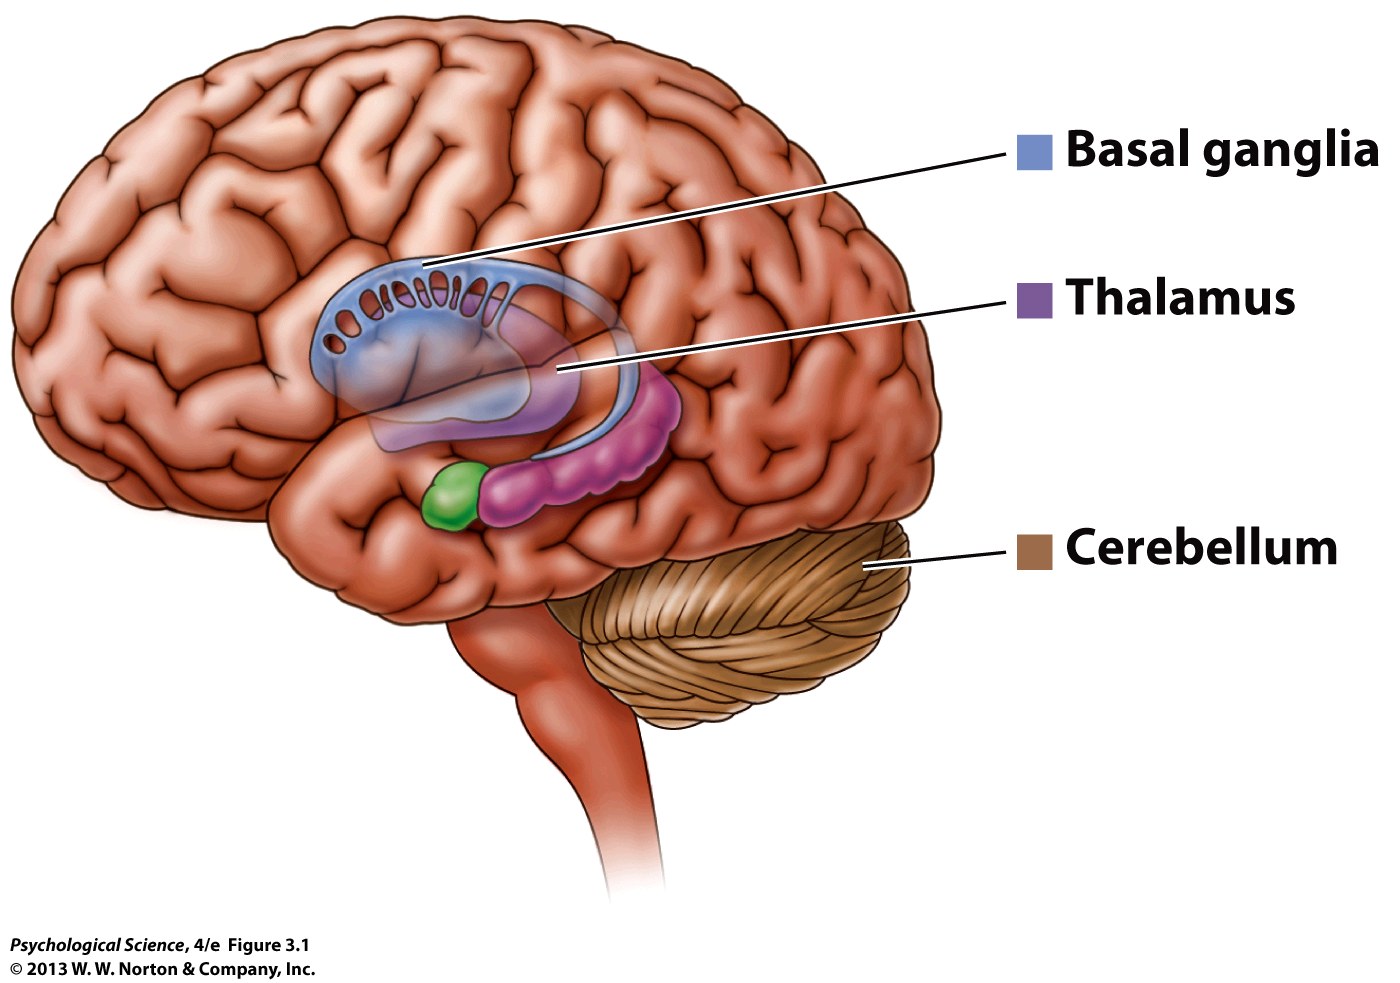 Neuroscience and behavior links